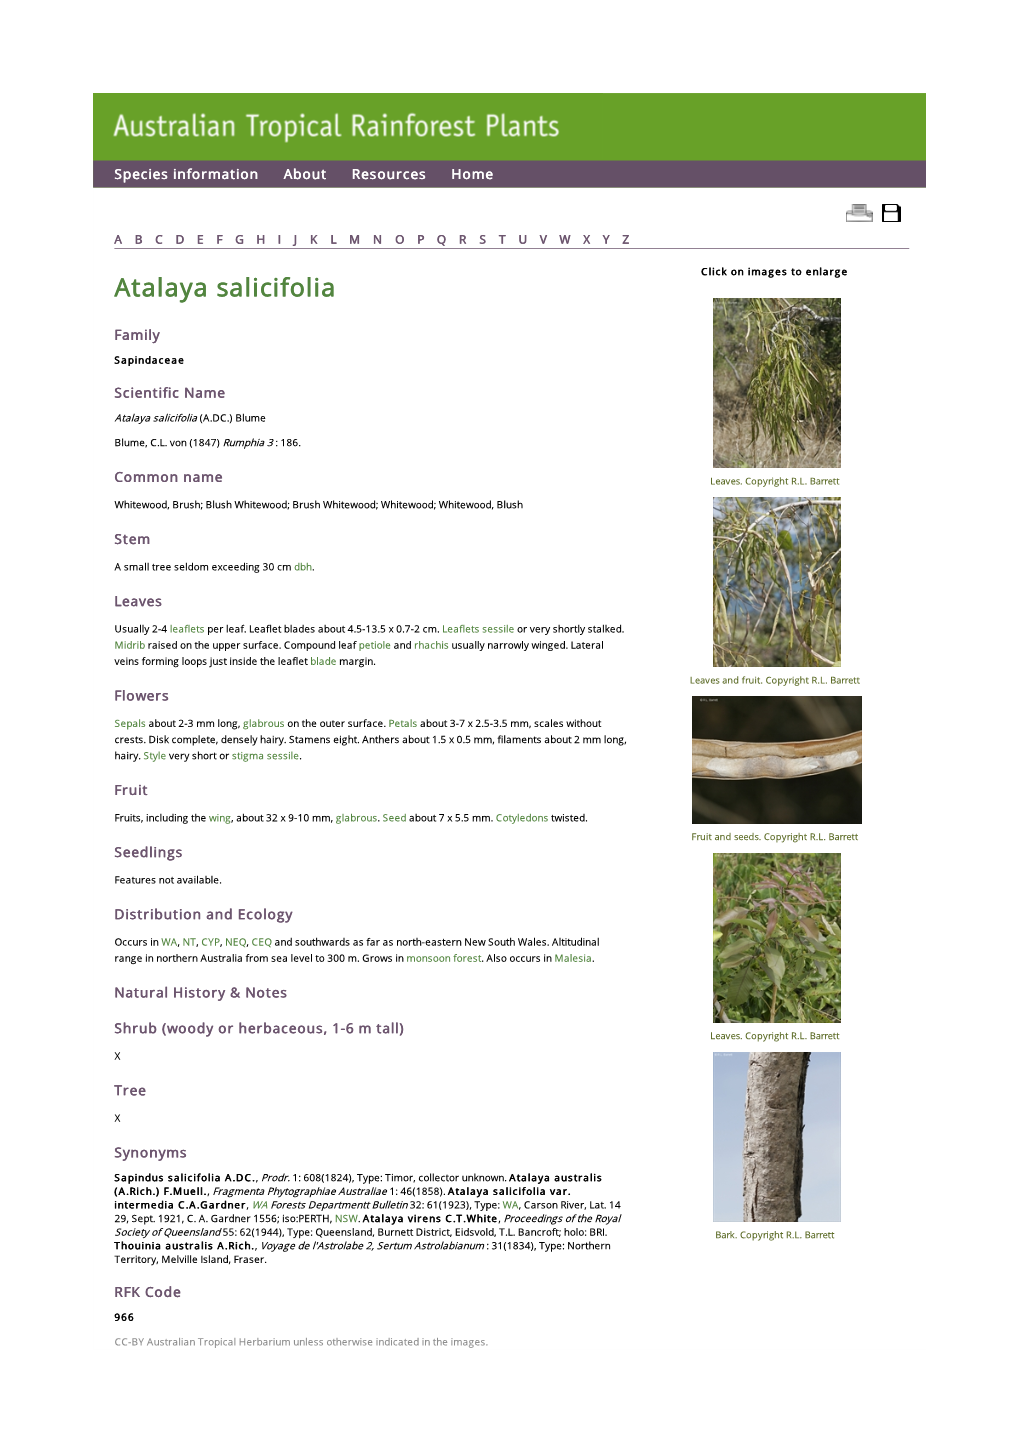 Atalaya Salicifolia Click on Images to Enlarge